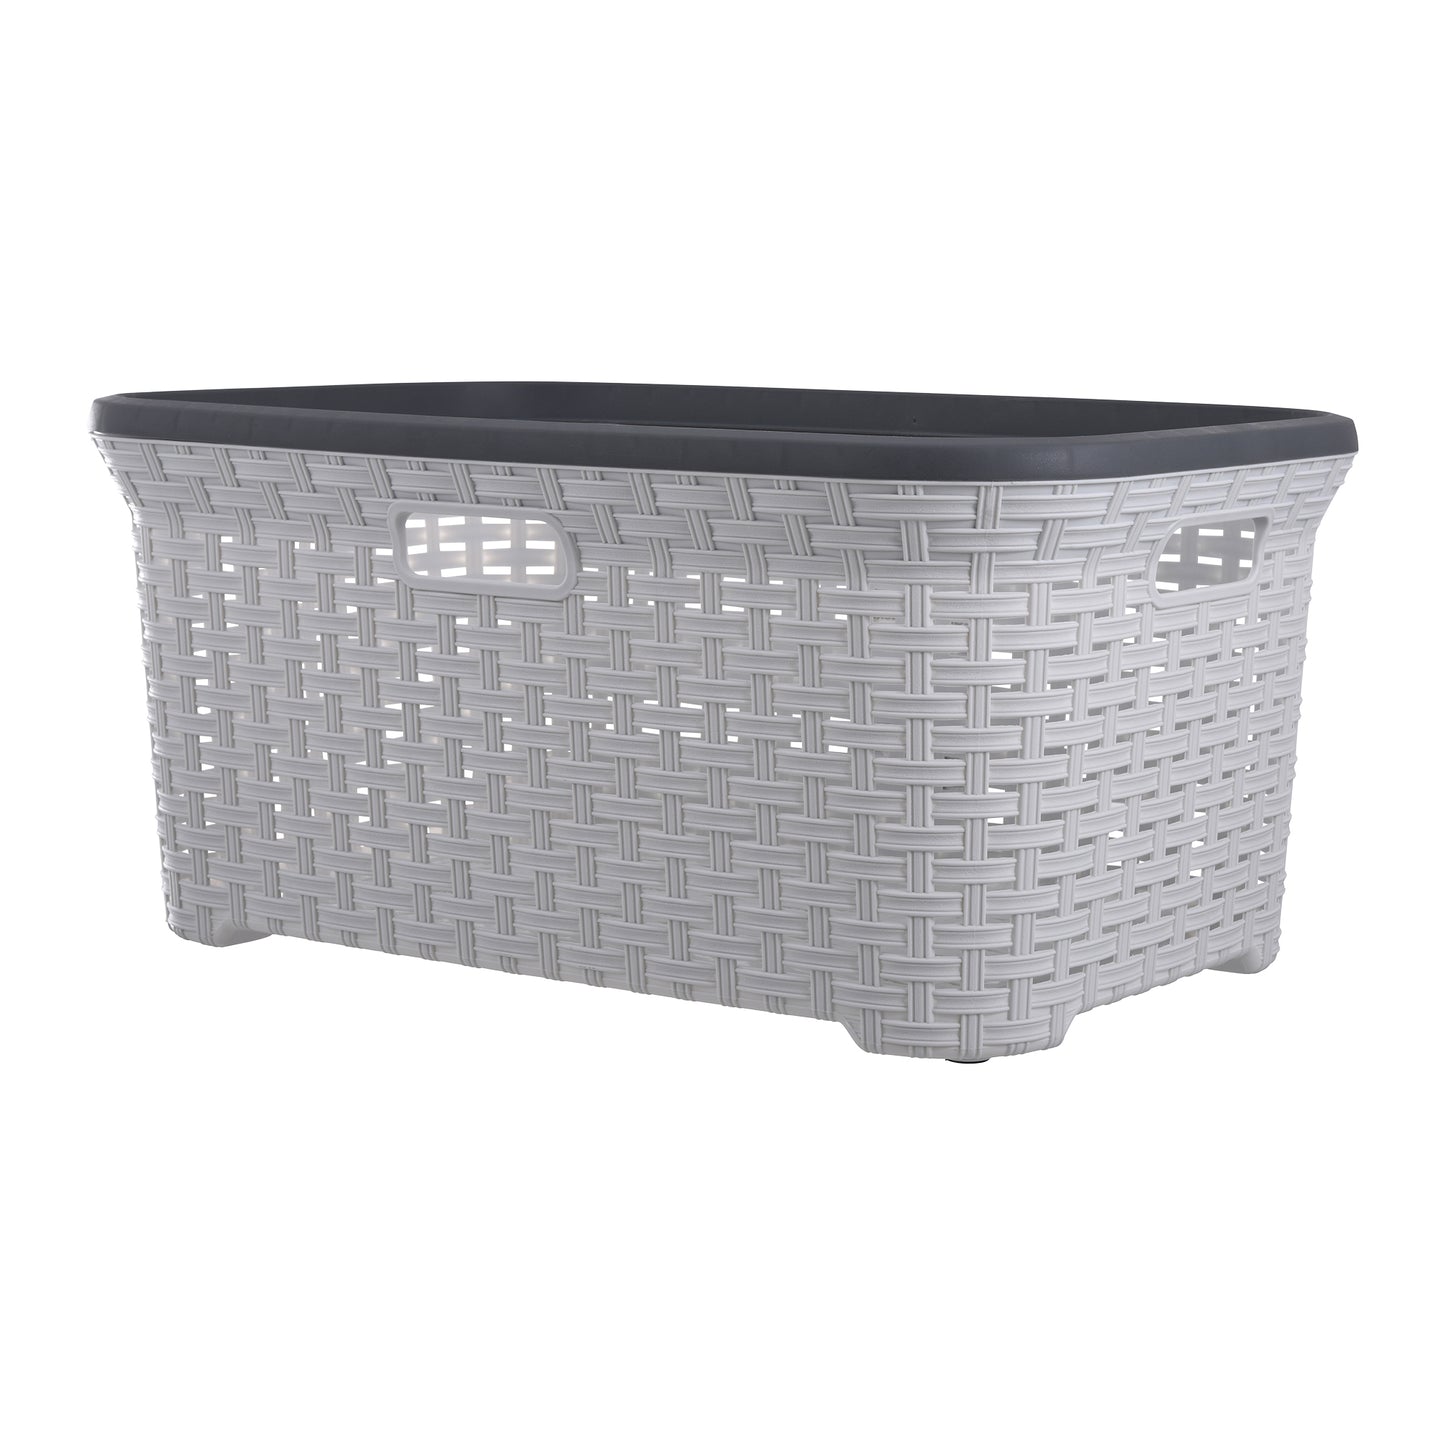 Wicker Style Laundry Basket with Cutout Handles, 50 Liter - White Smoke